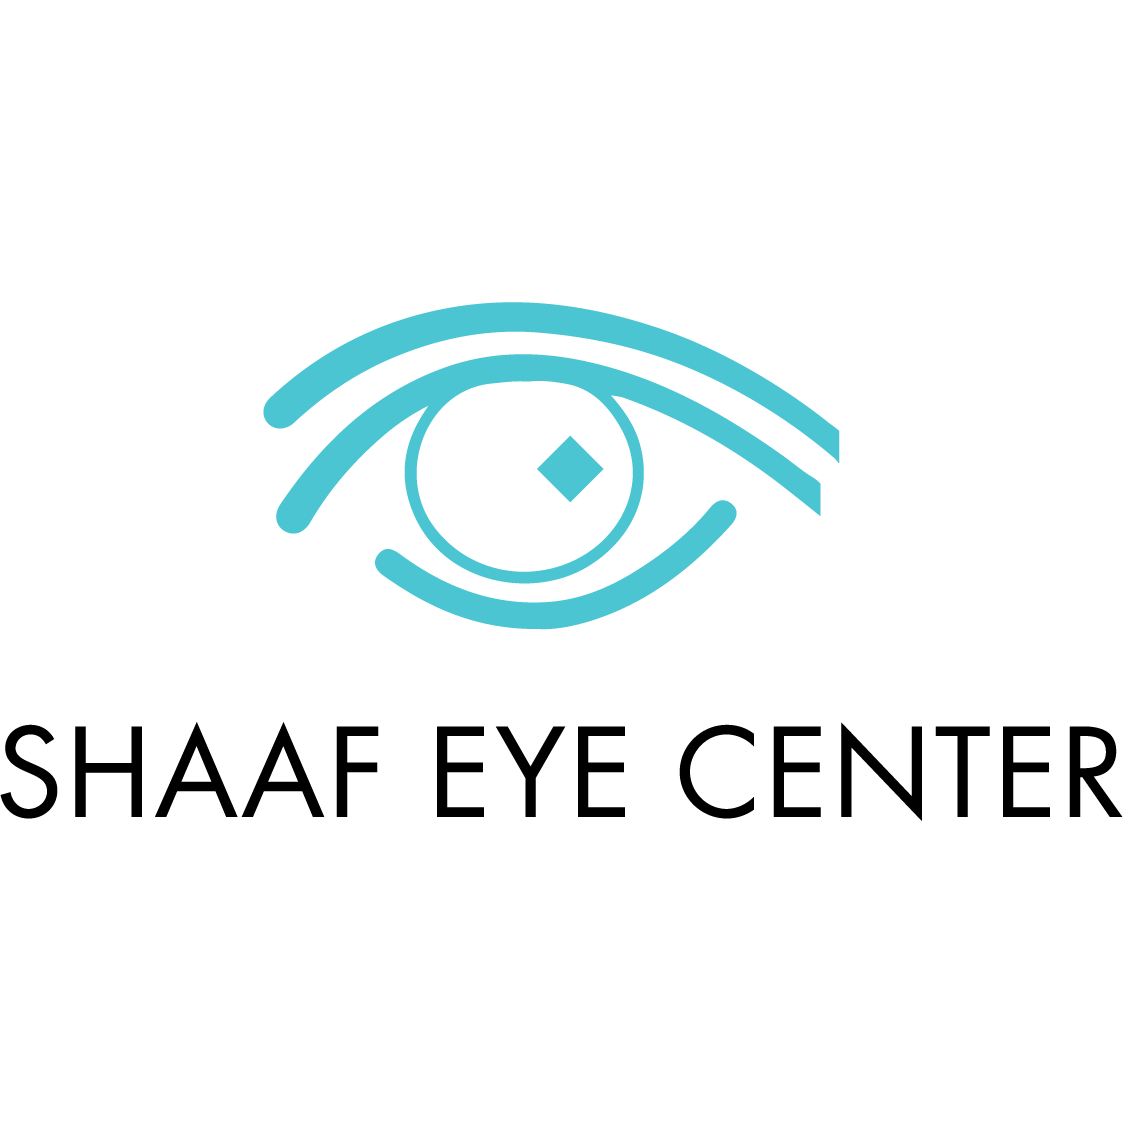 Shaaf Eye Center